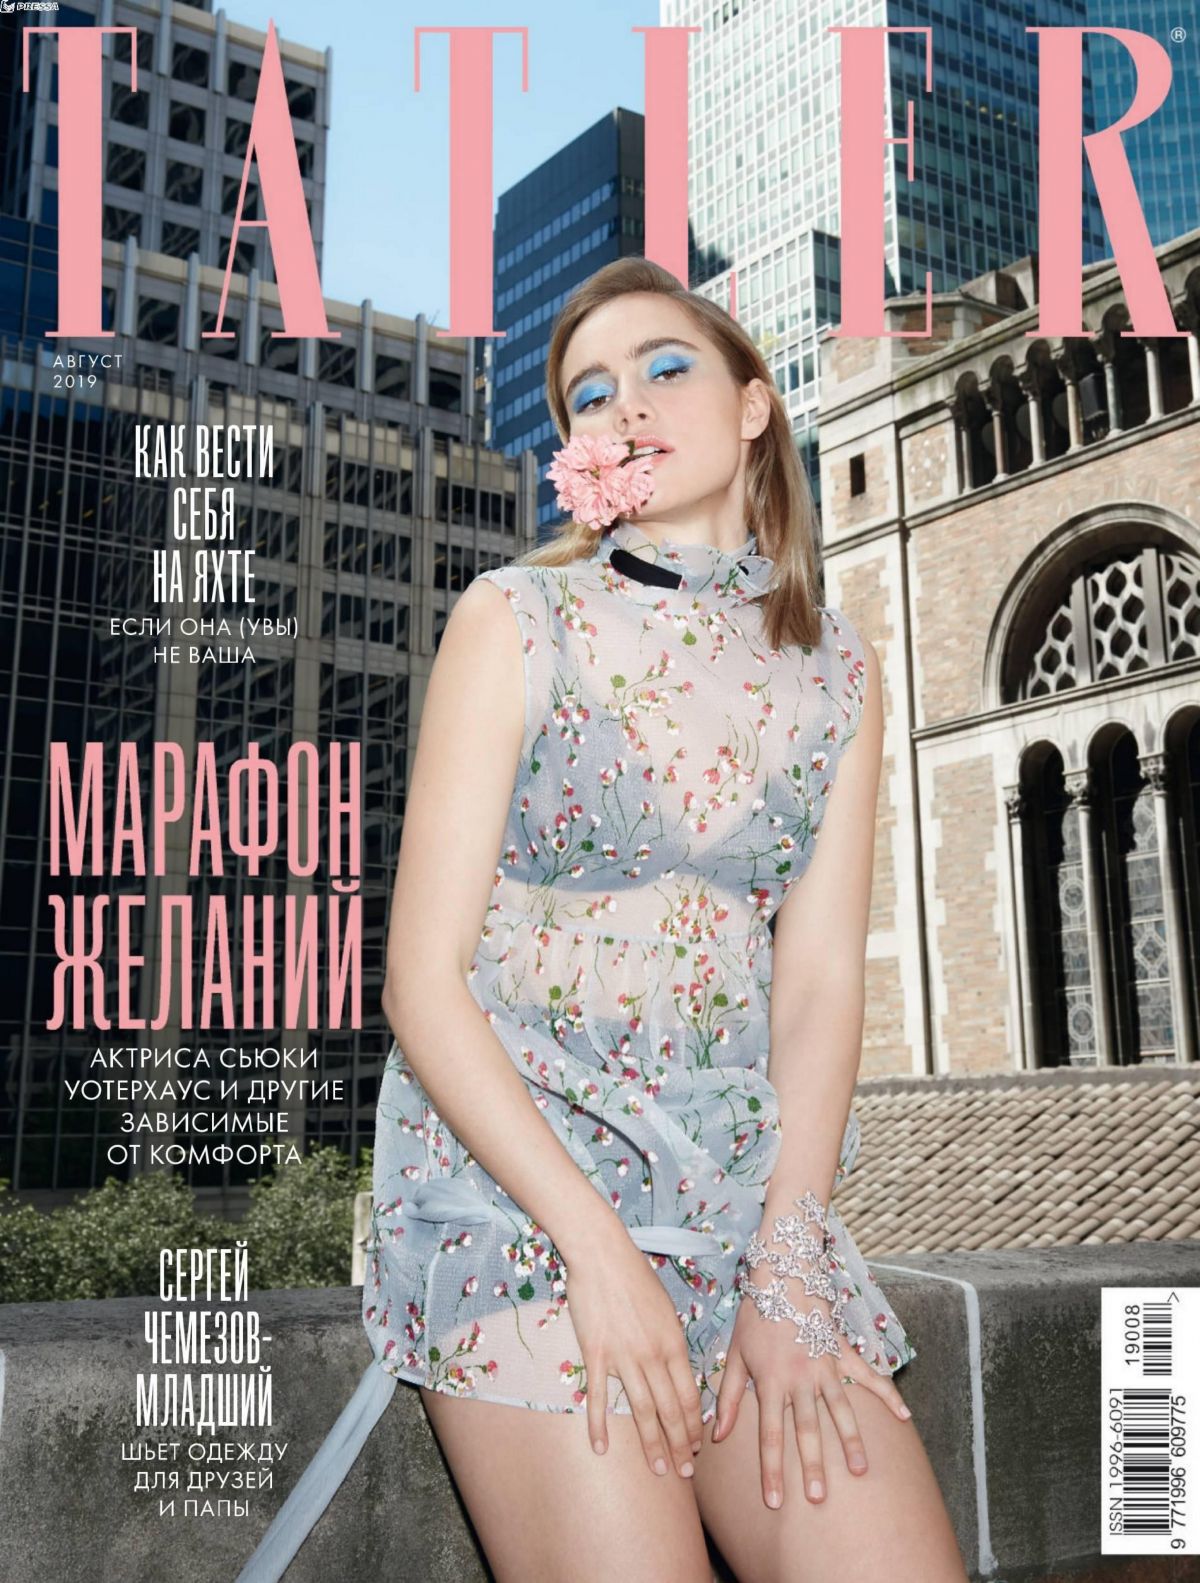 suki-waterhouse-in-tatler-magazine-russia-august-2019-8.jpg